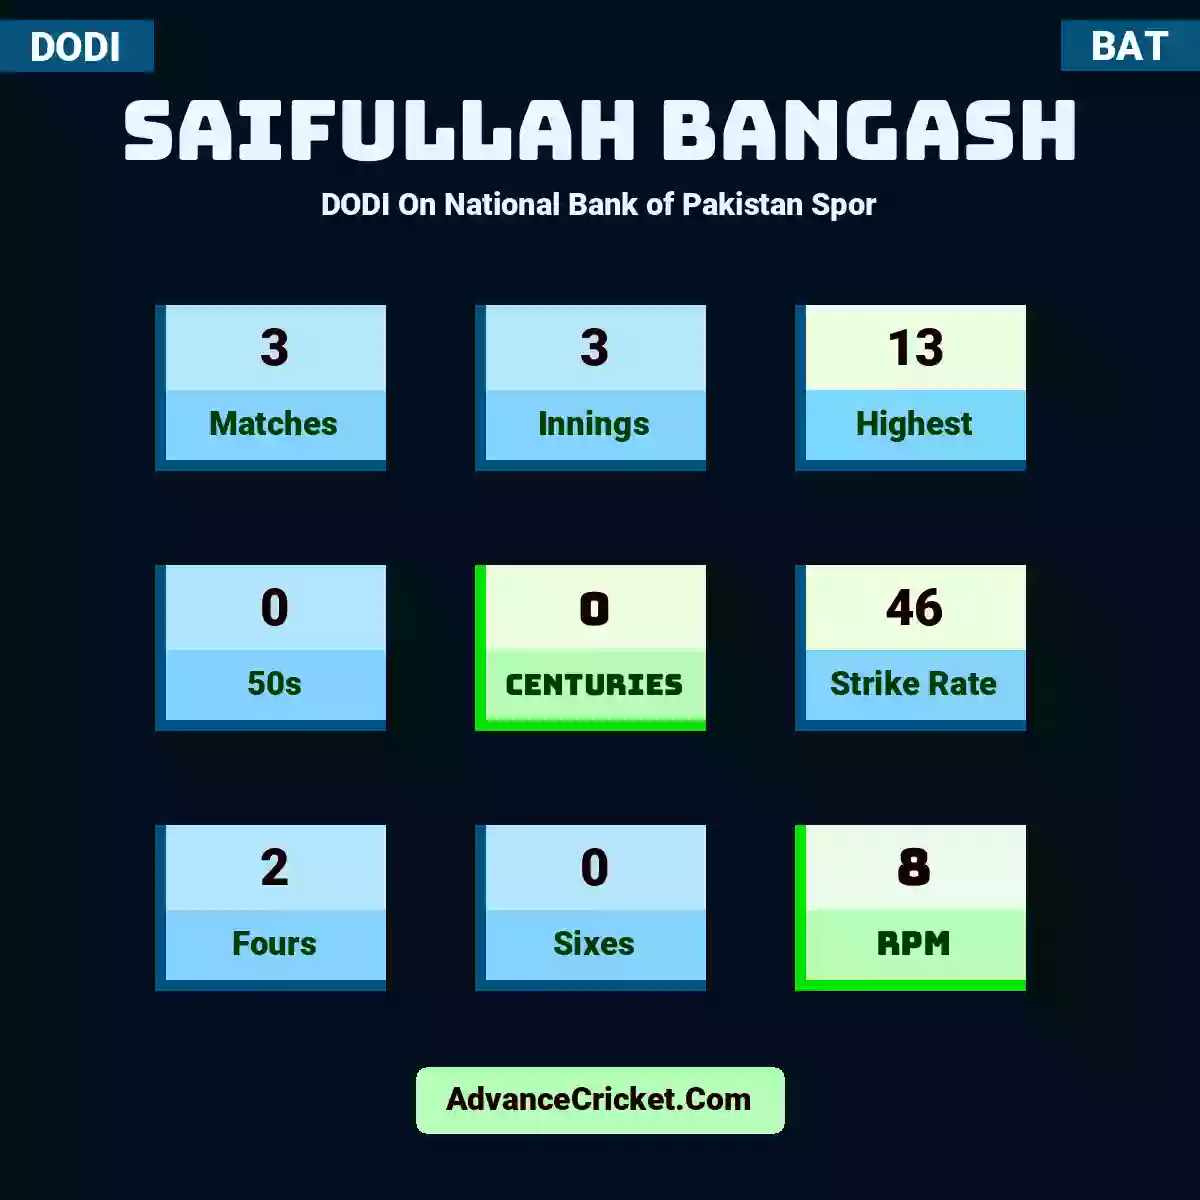 Saifullah Bangash DODI  On National Bank of Pakistan Spor, Saifullah Bangash played 3 matches, scored 13 runs as highest, 0 half-centuries, and 0 centuries, with a strike rate of 46. S.Bangash hit 2 fours and 0 sixes, with an RPM of 8.